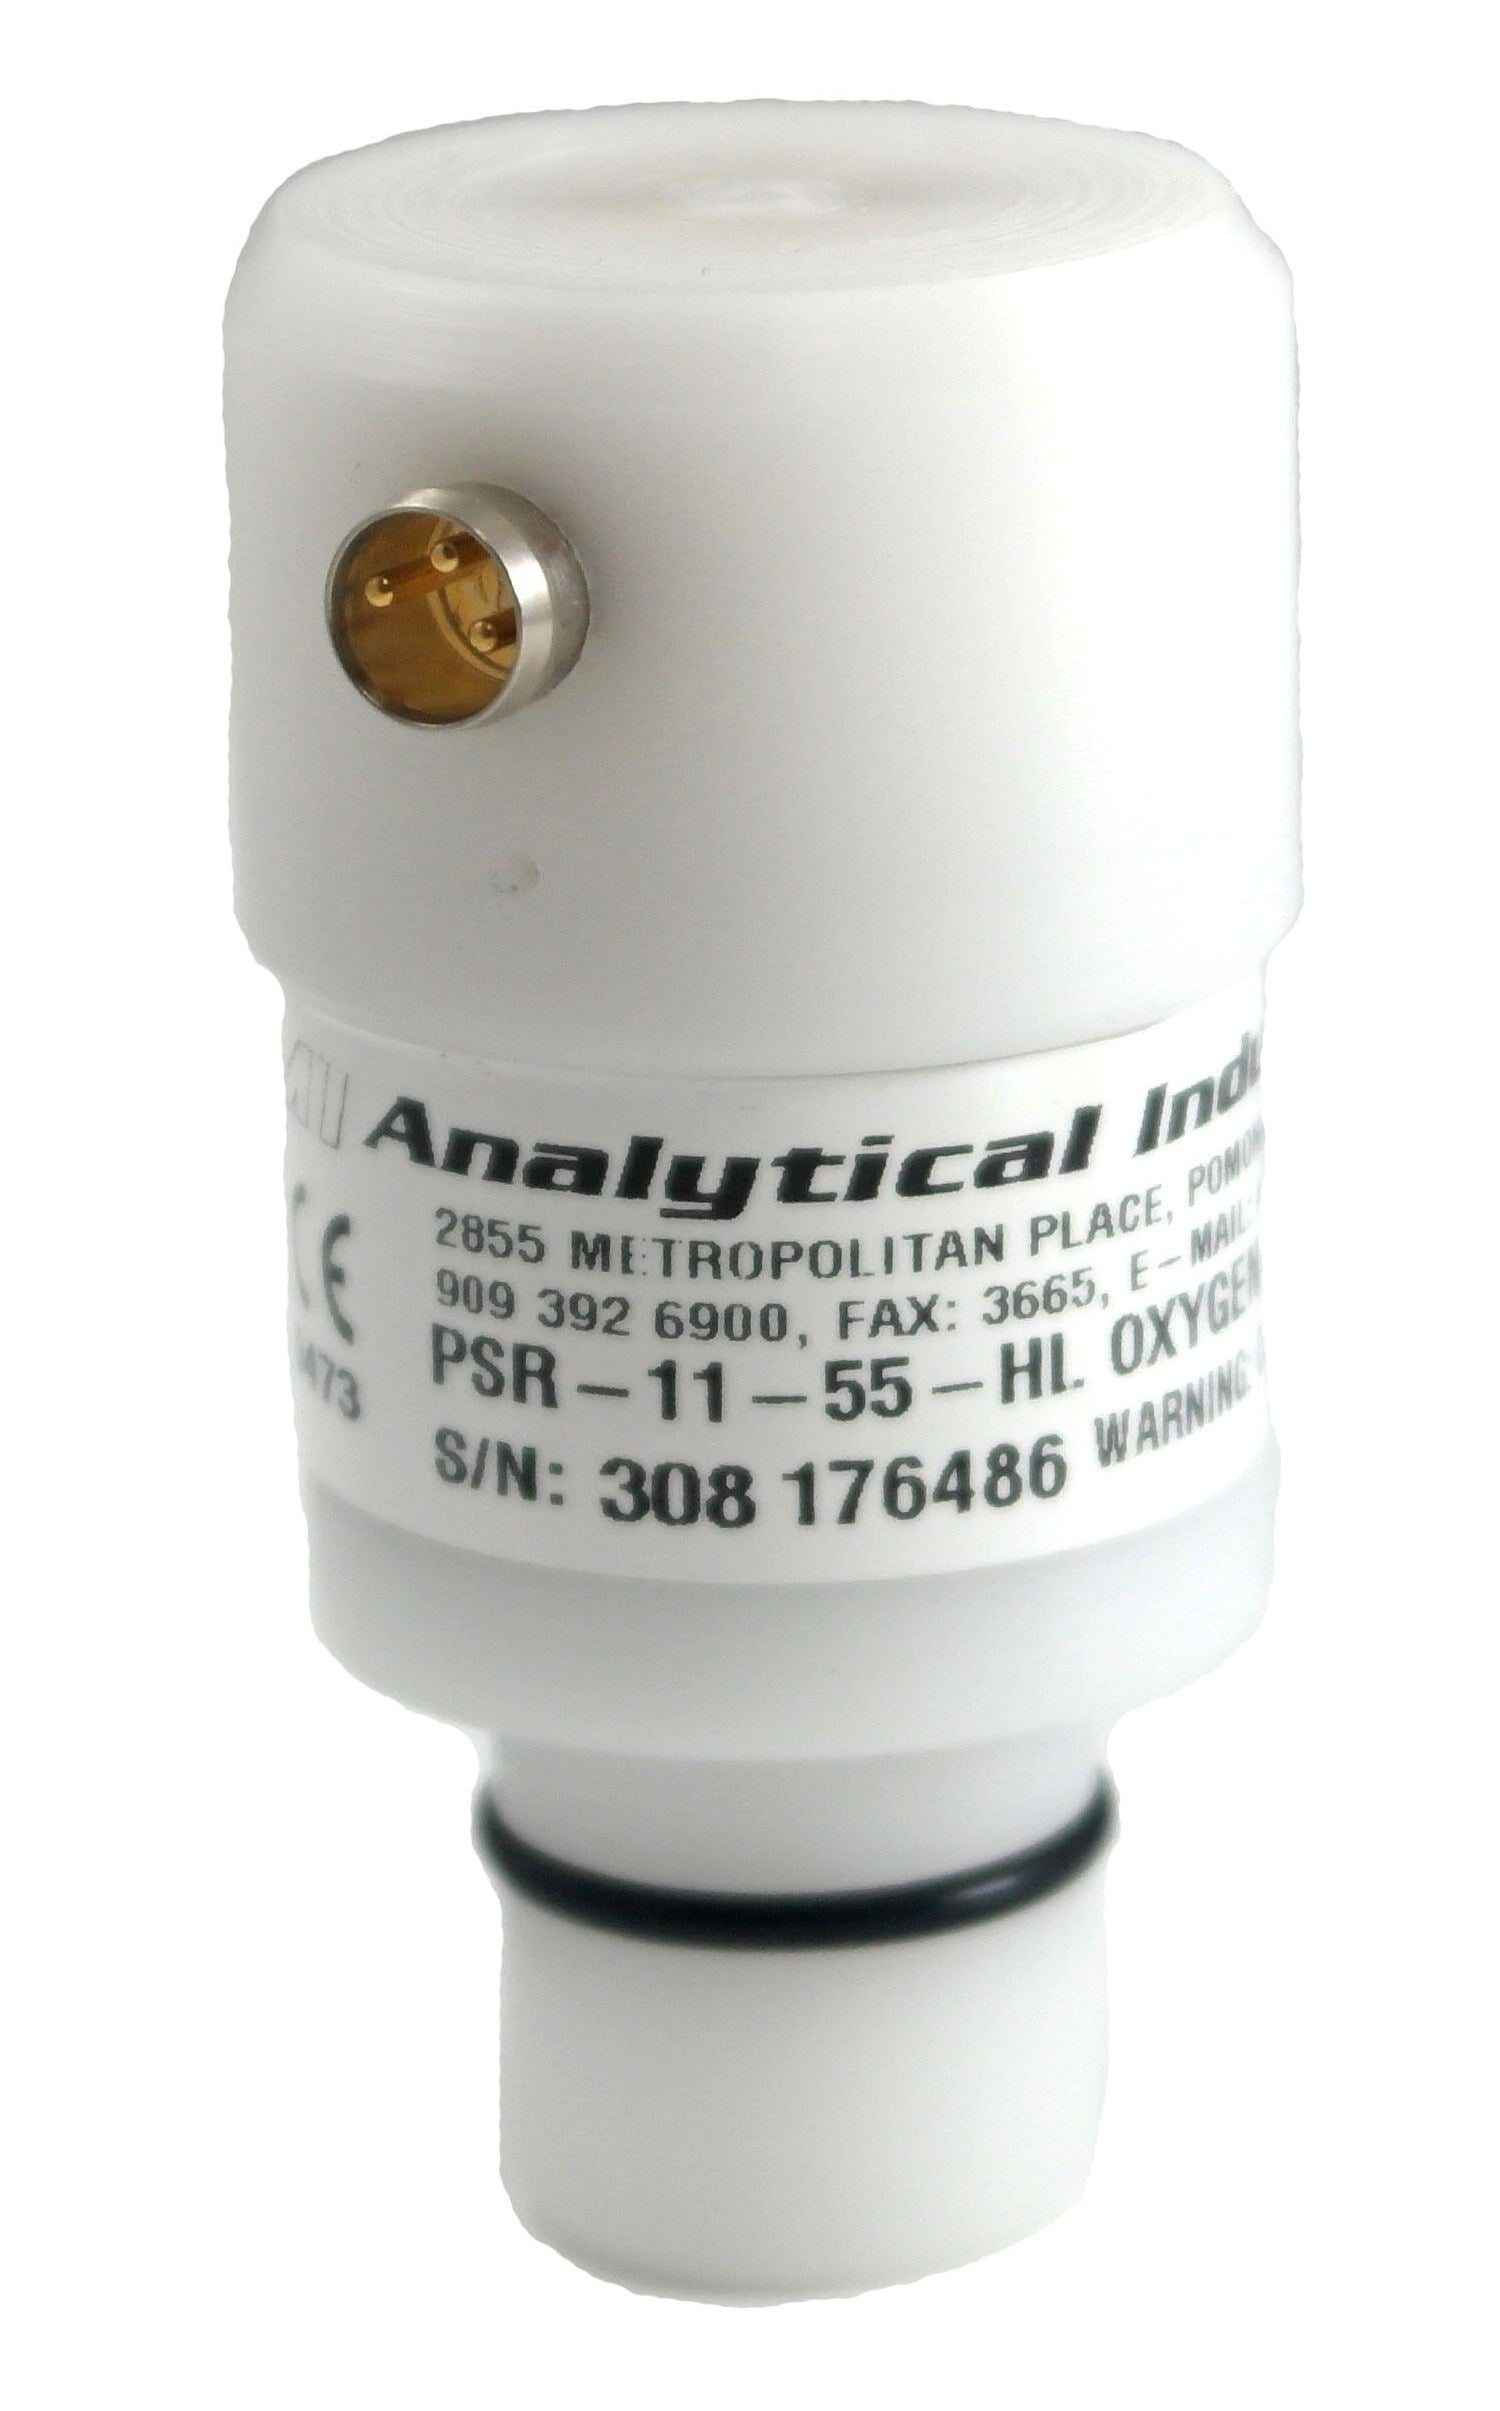 Analytical Industries PSR-11-55-HL Oxygen Sensor